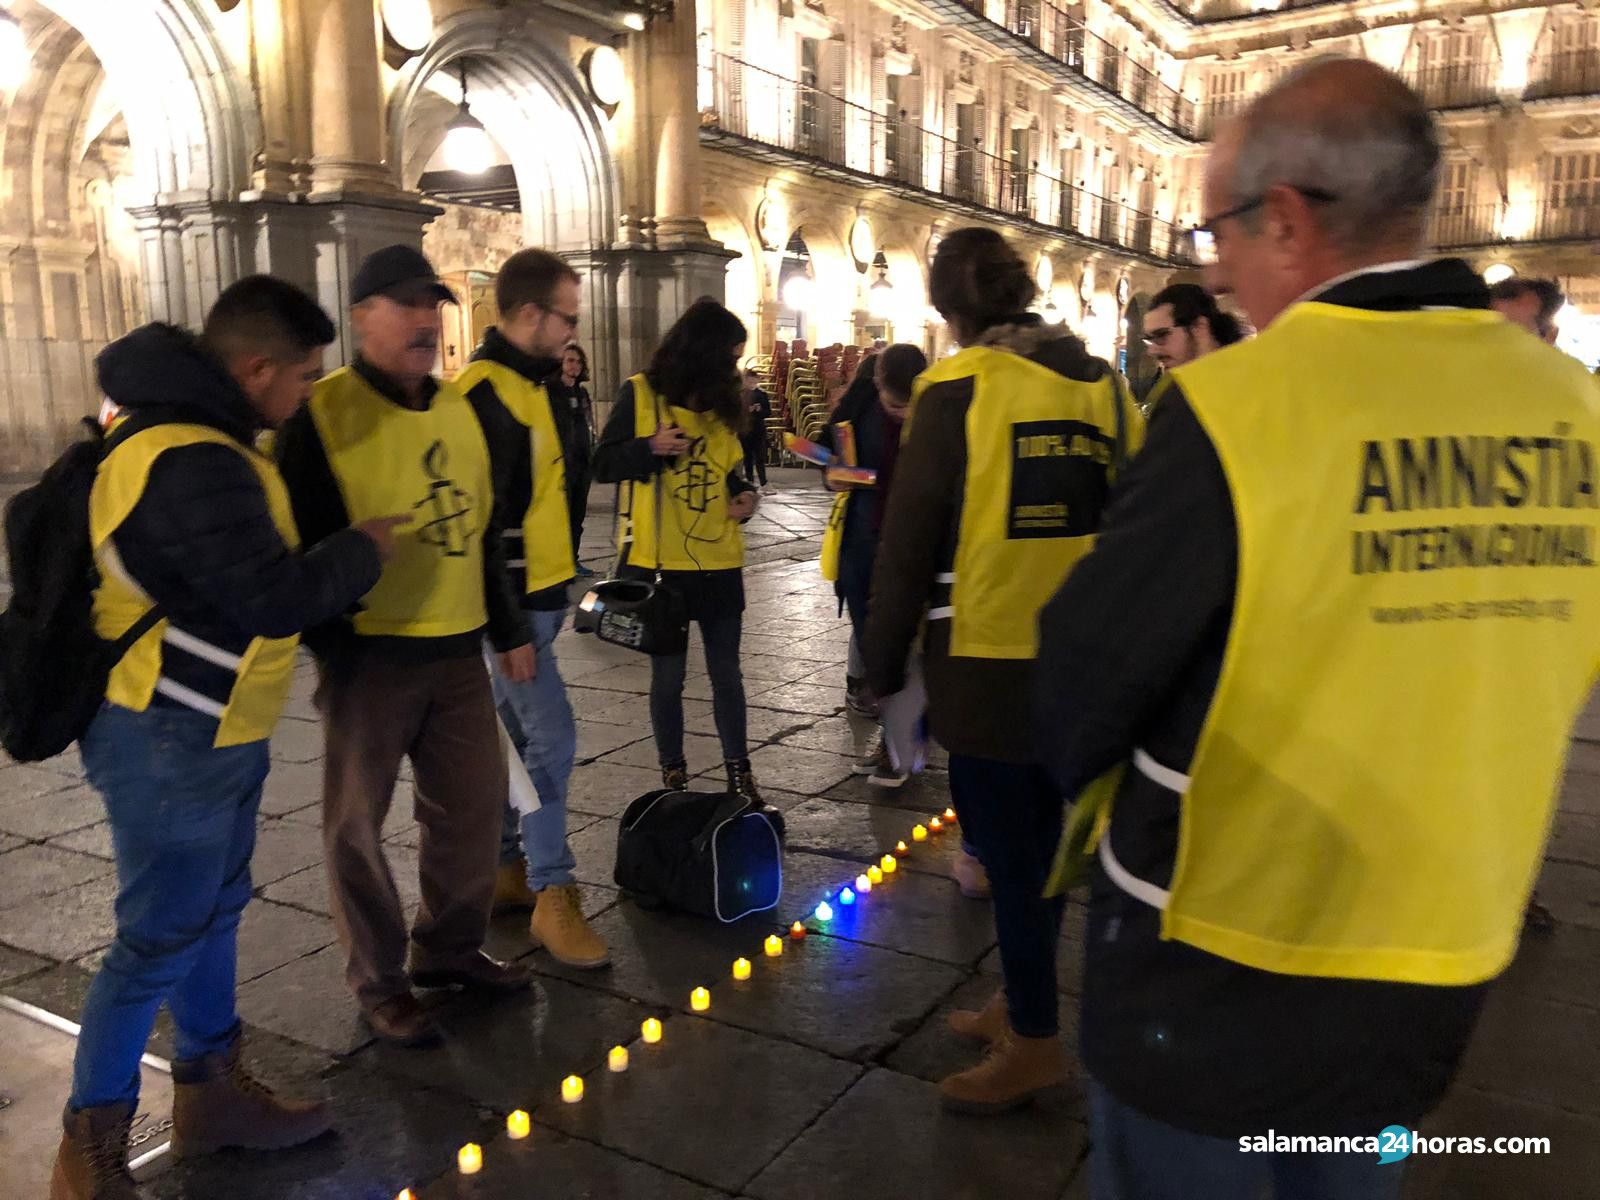  Perfomance de Amnistia Internacional en la Plaza Mayor (6) 